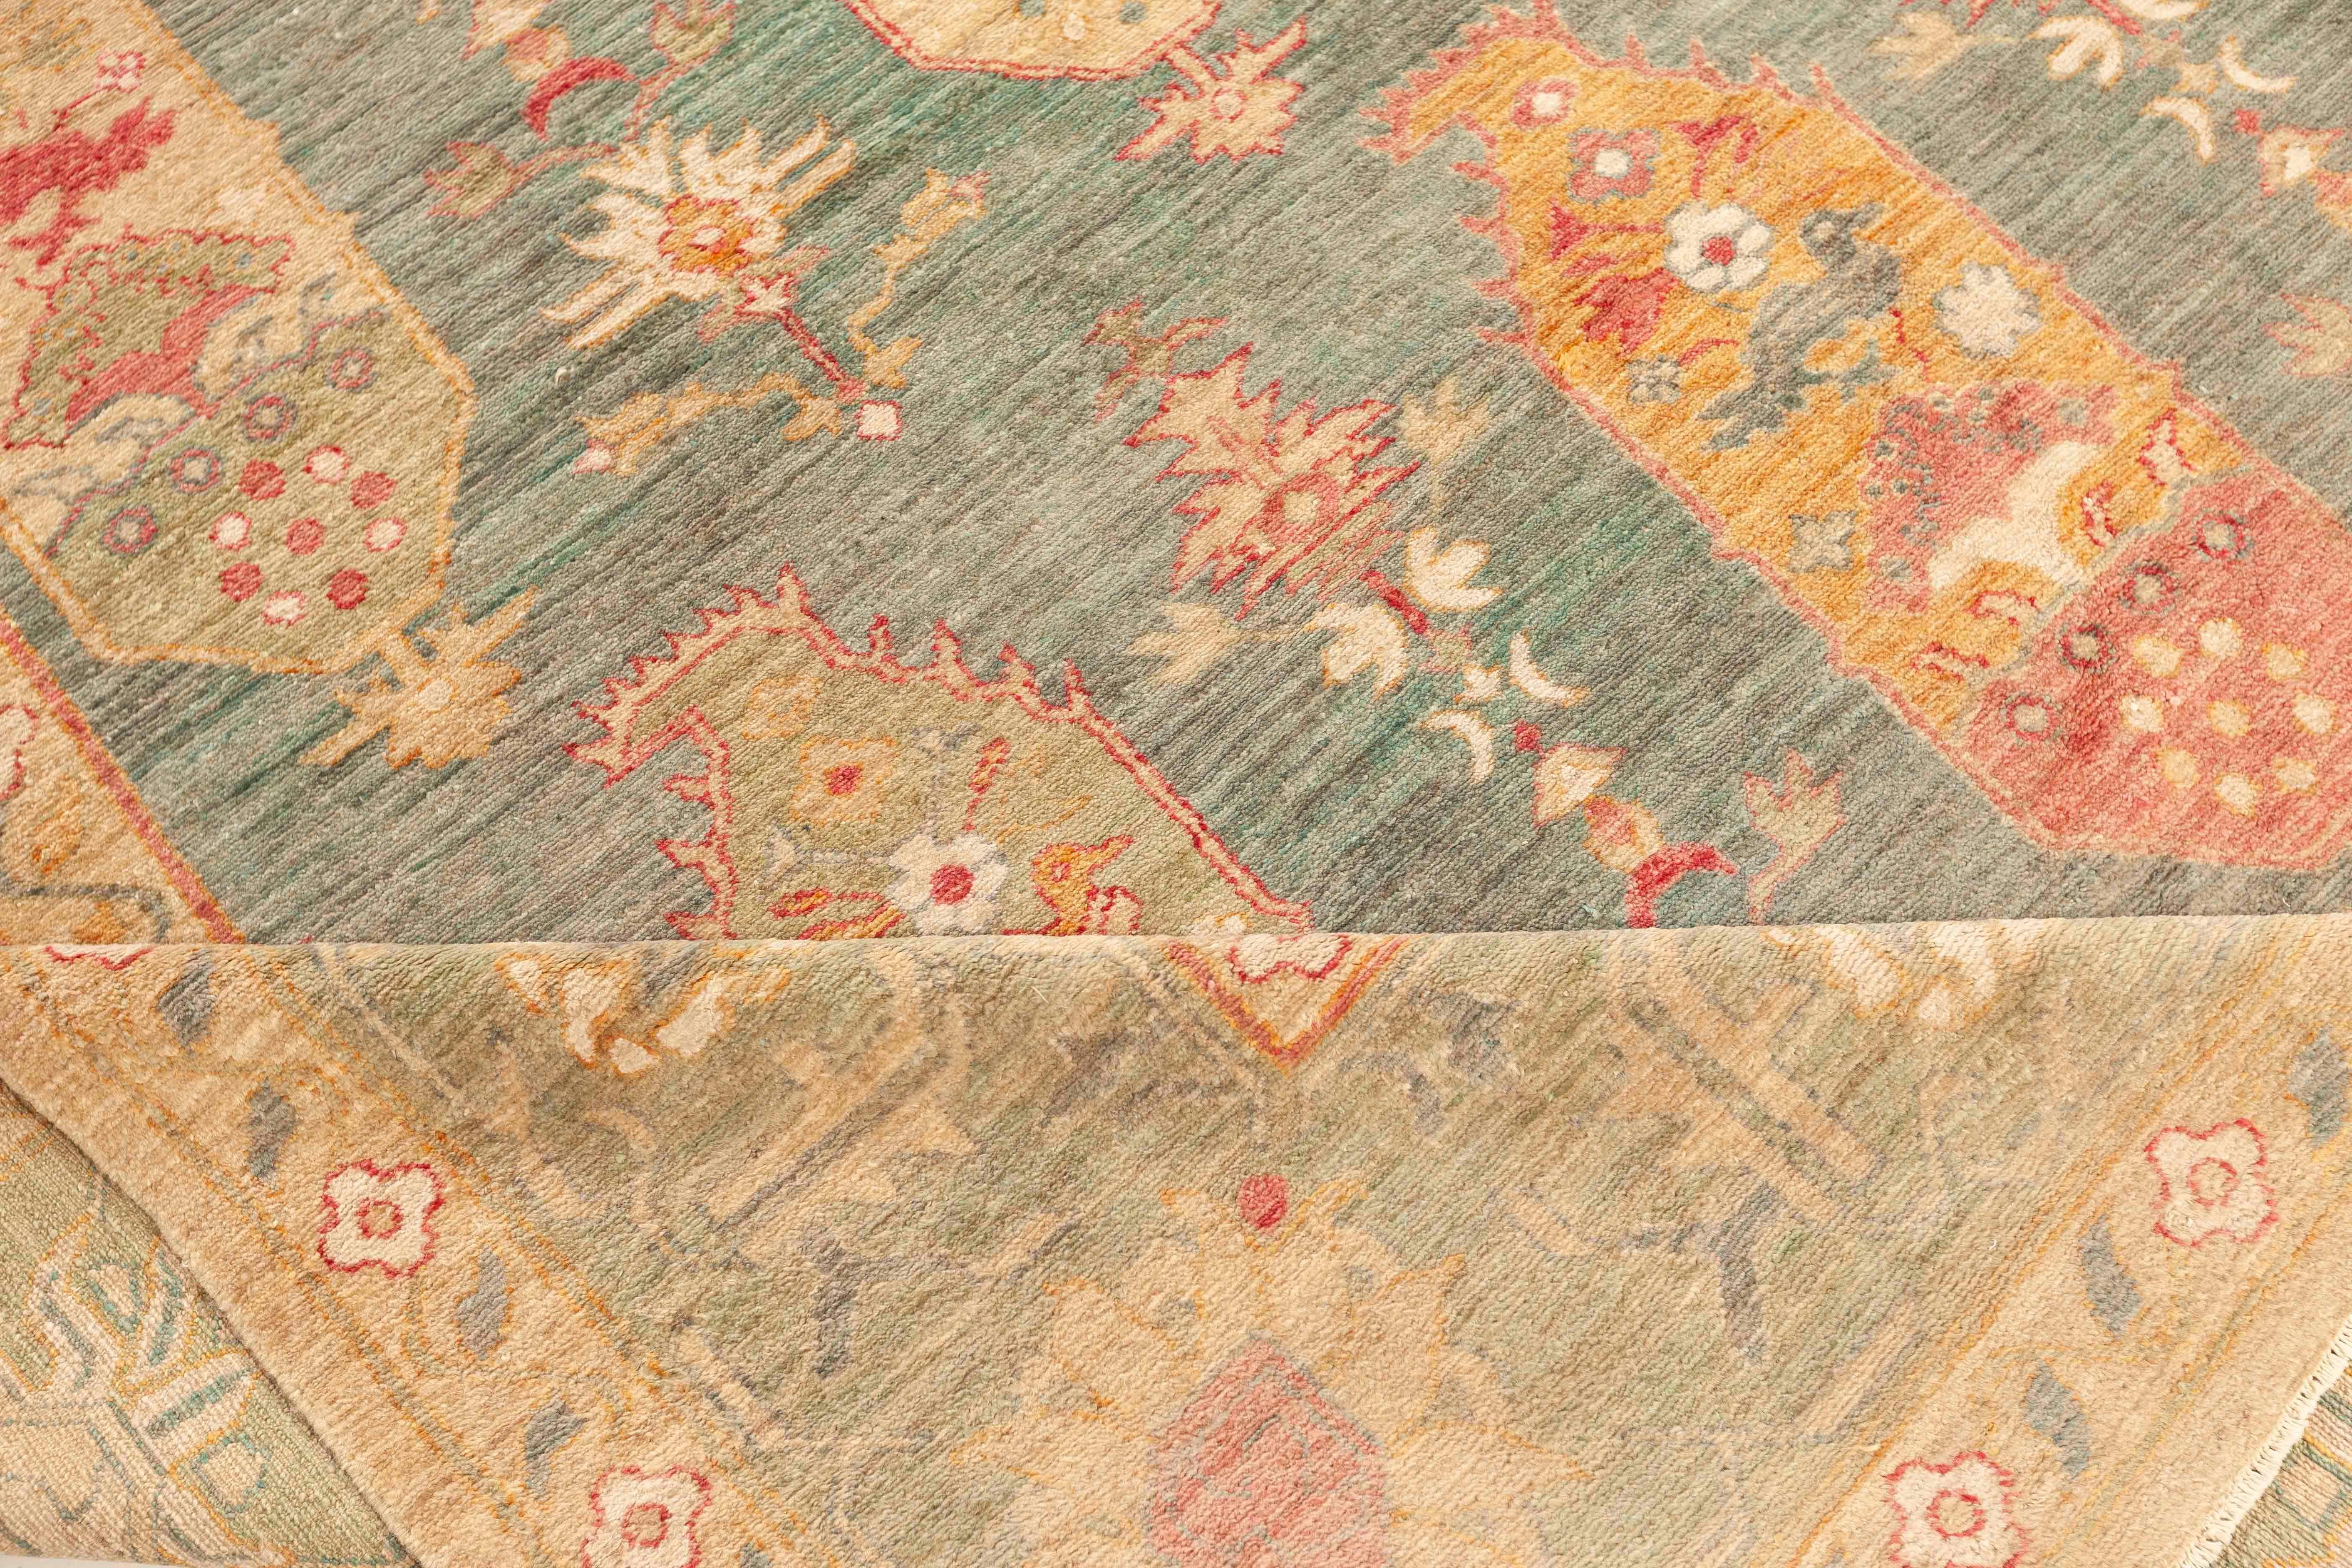 Traditional Oushak design rug by Doris Leslie Blau.
Size: 14'0